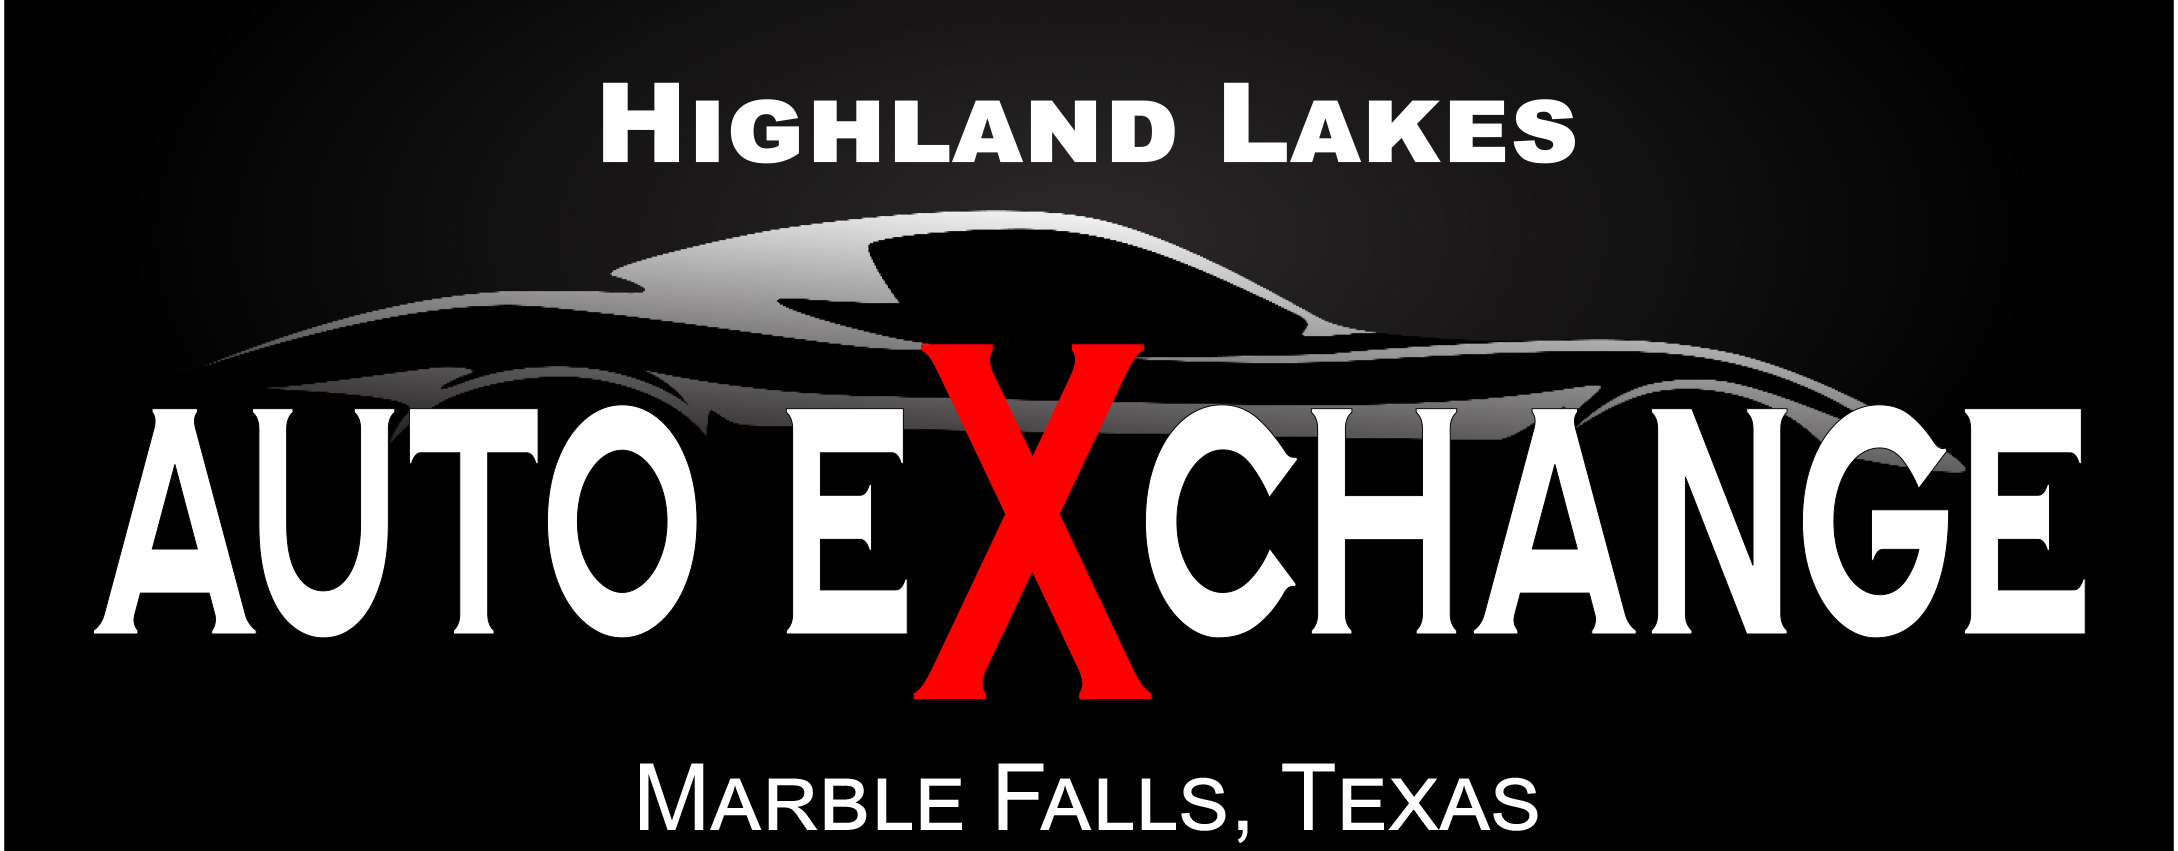 Highland Lakes Auto Exchange